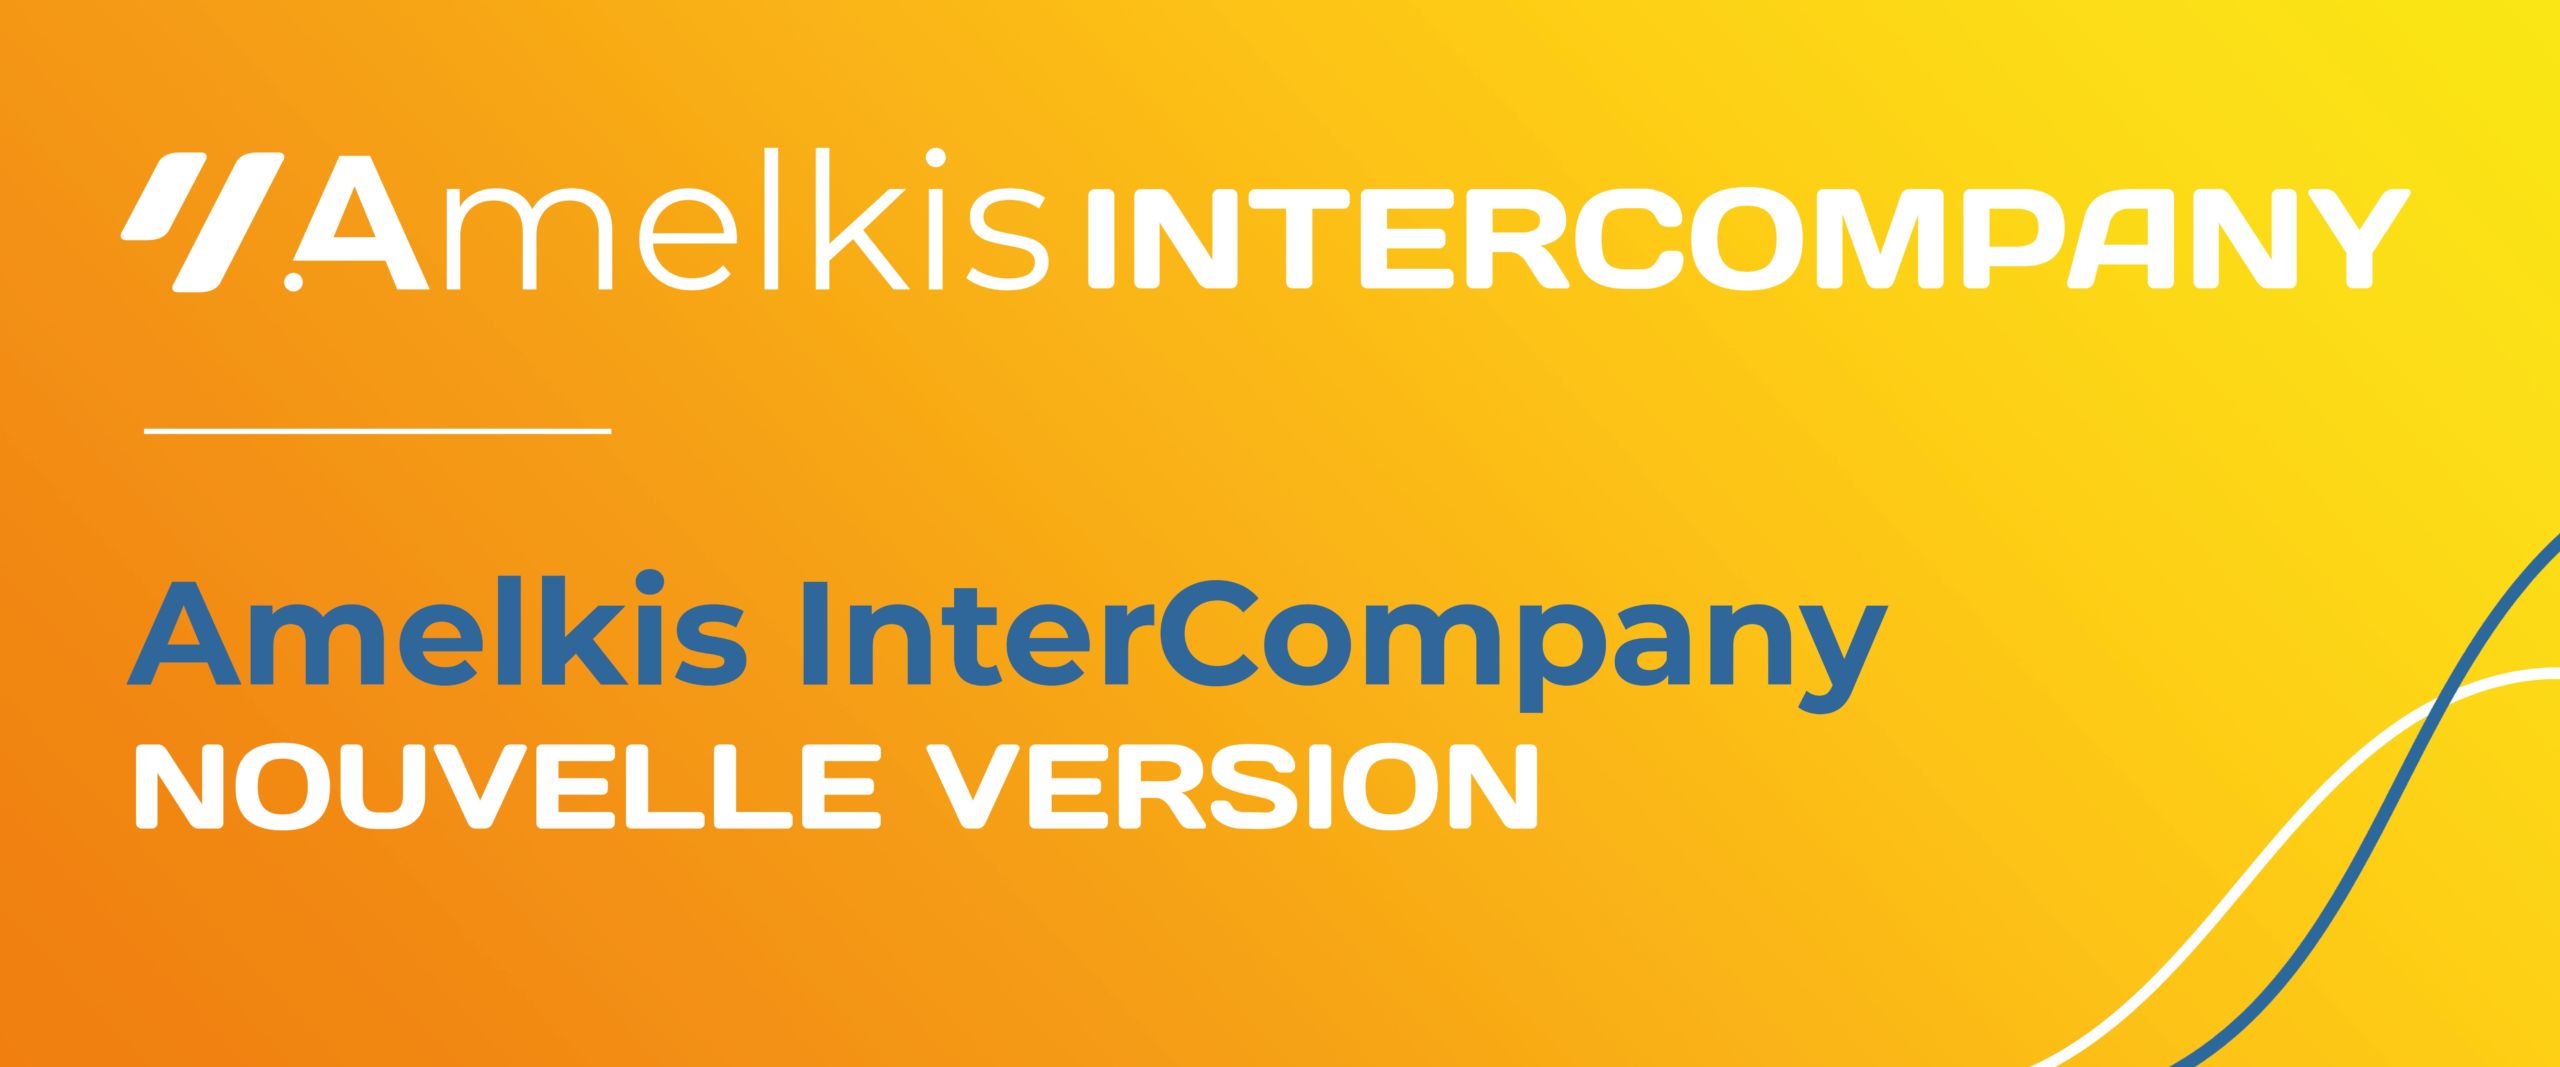 Nouvelle version Amelkis InterCompany (2.0.0.17)